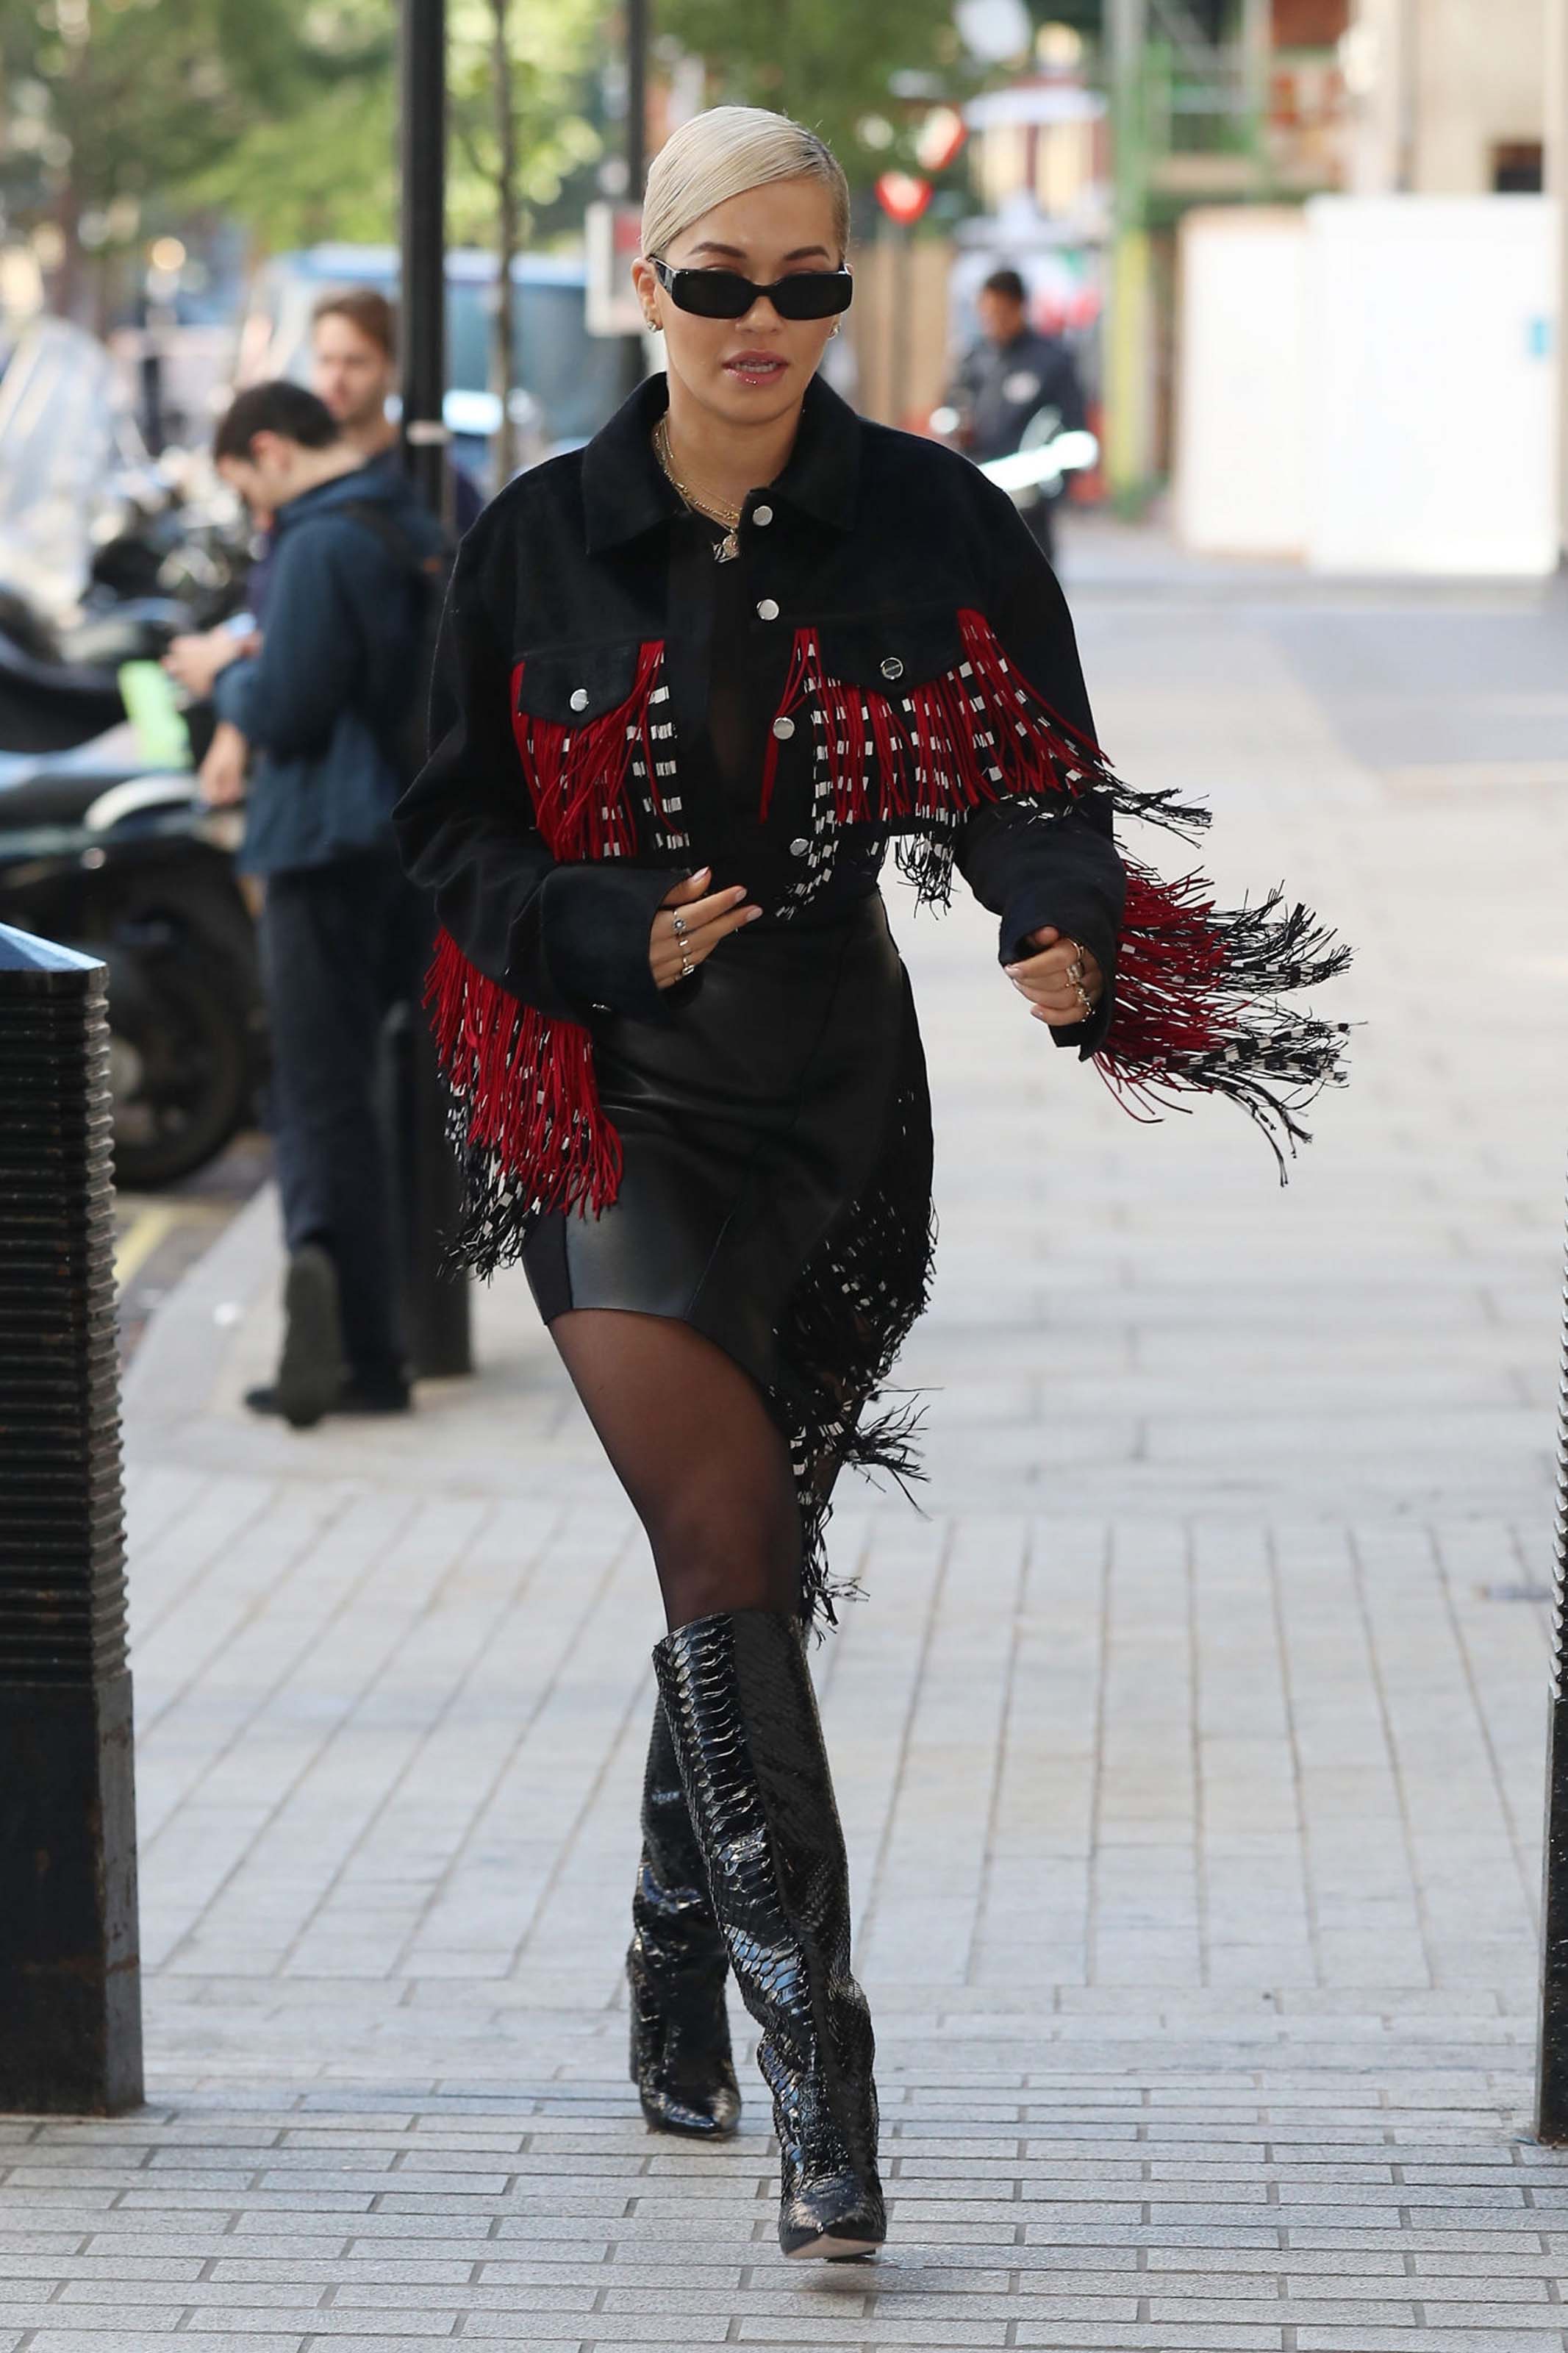 Rita Ora at a radio promo in London